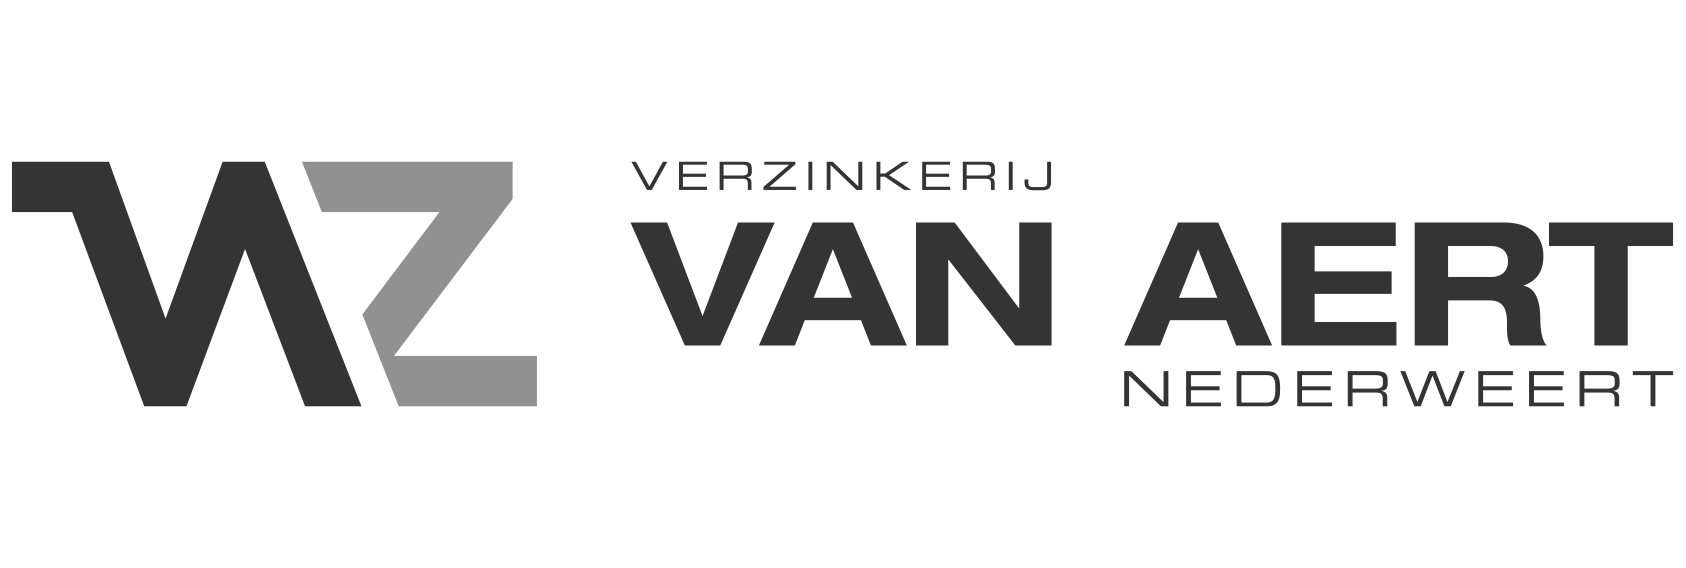 VerzinkerijvanAert_logo